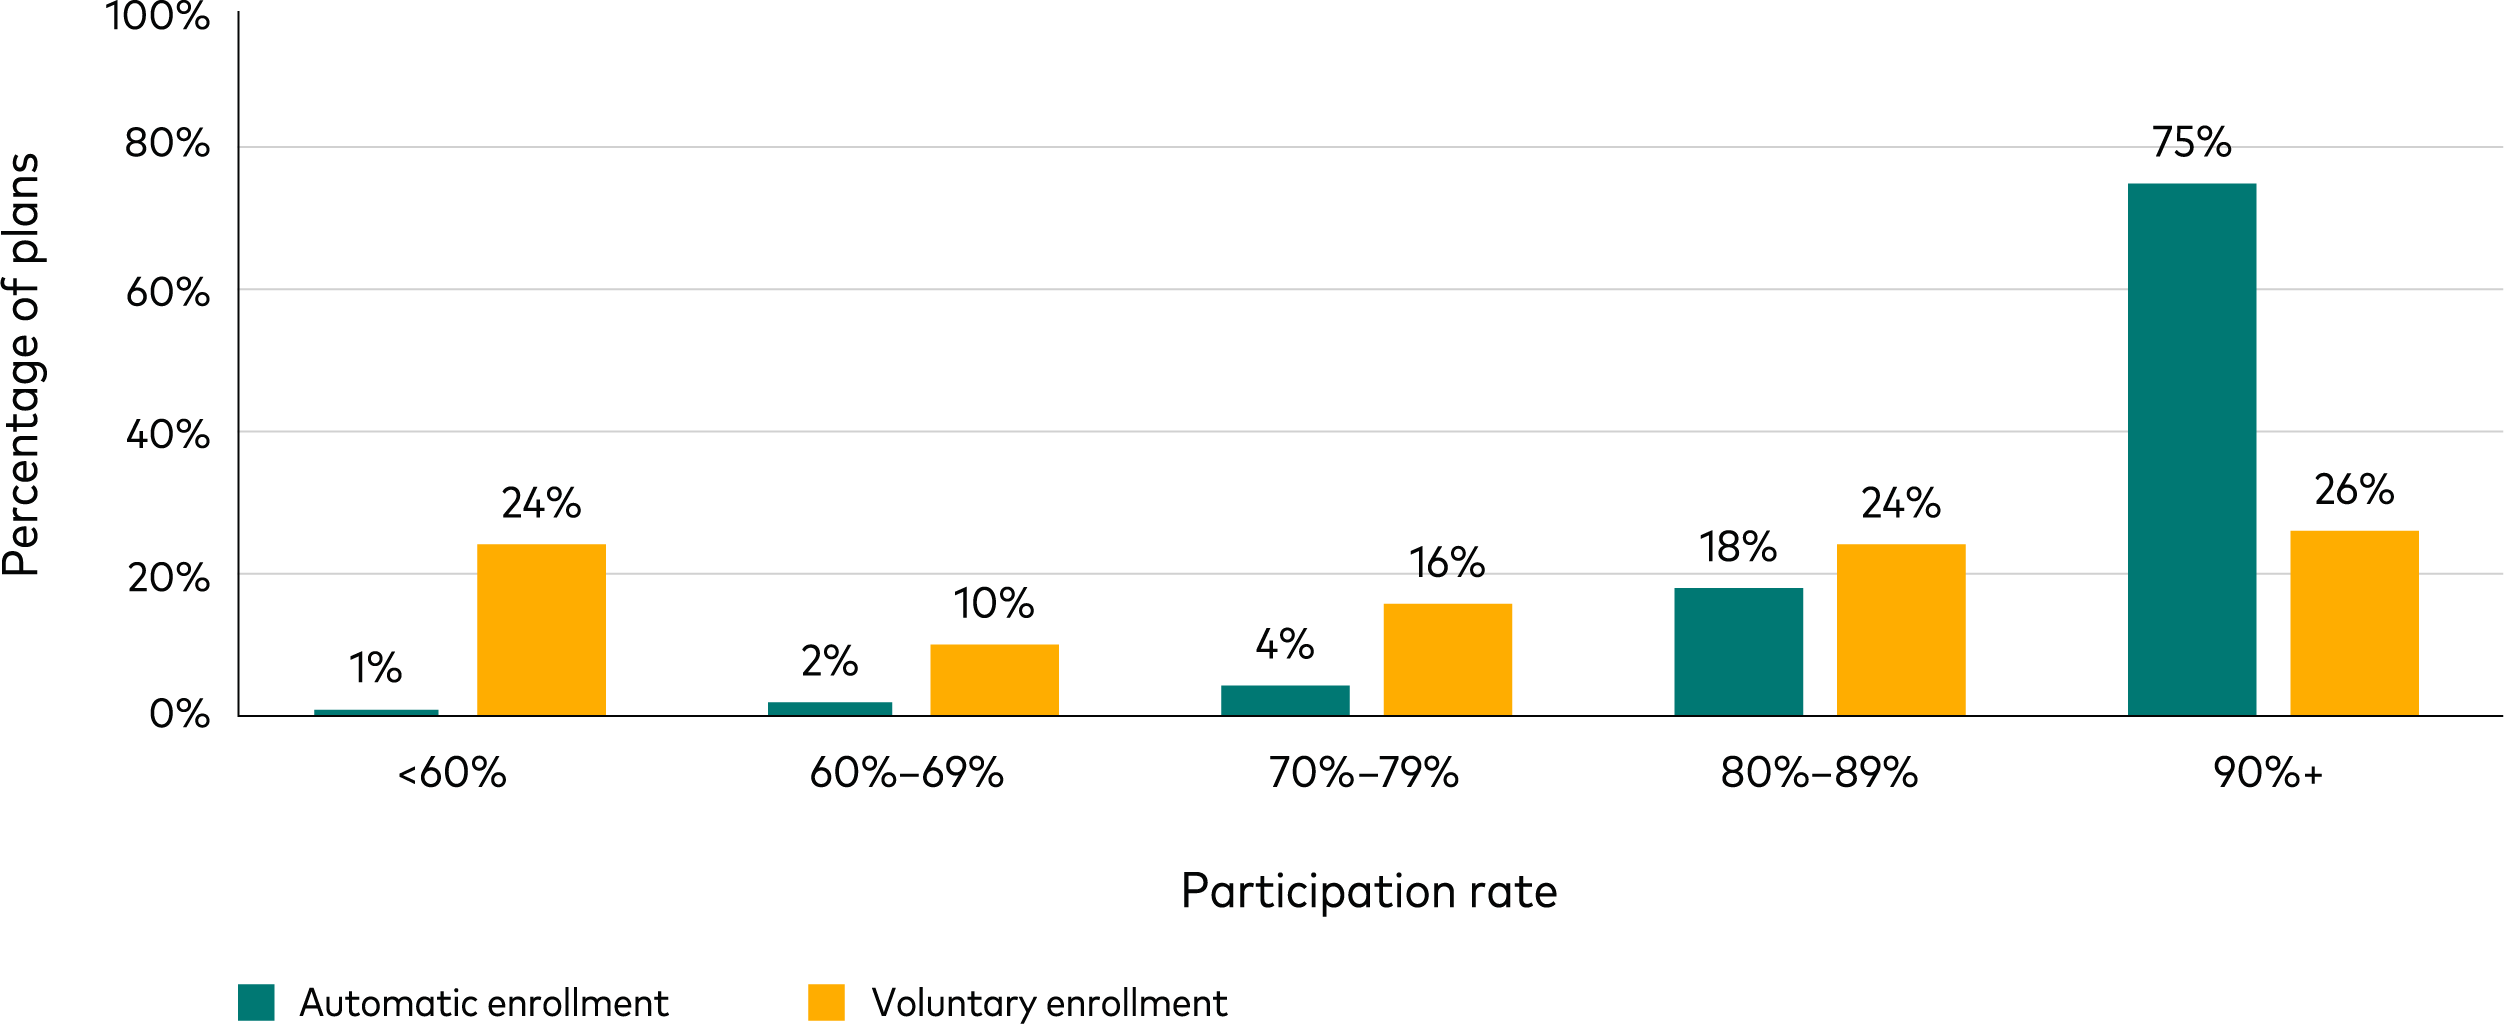 Participation rates by plan design in Vanguard  DC plans